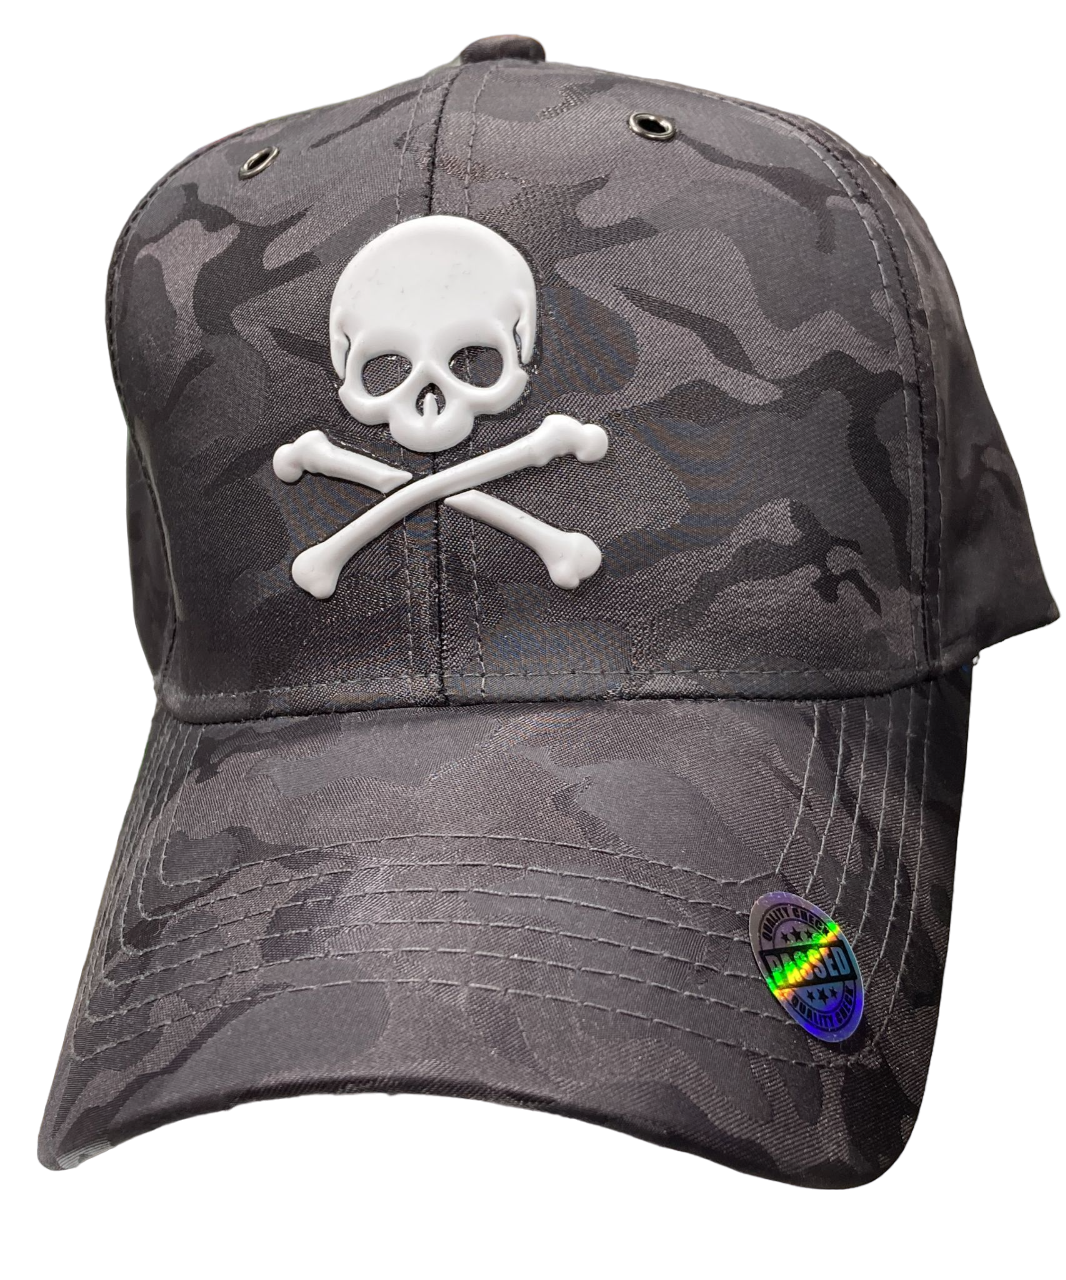 Adjustable Baseball Hat - Skull (Gray/Camo) - MK Distro